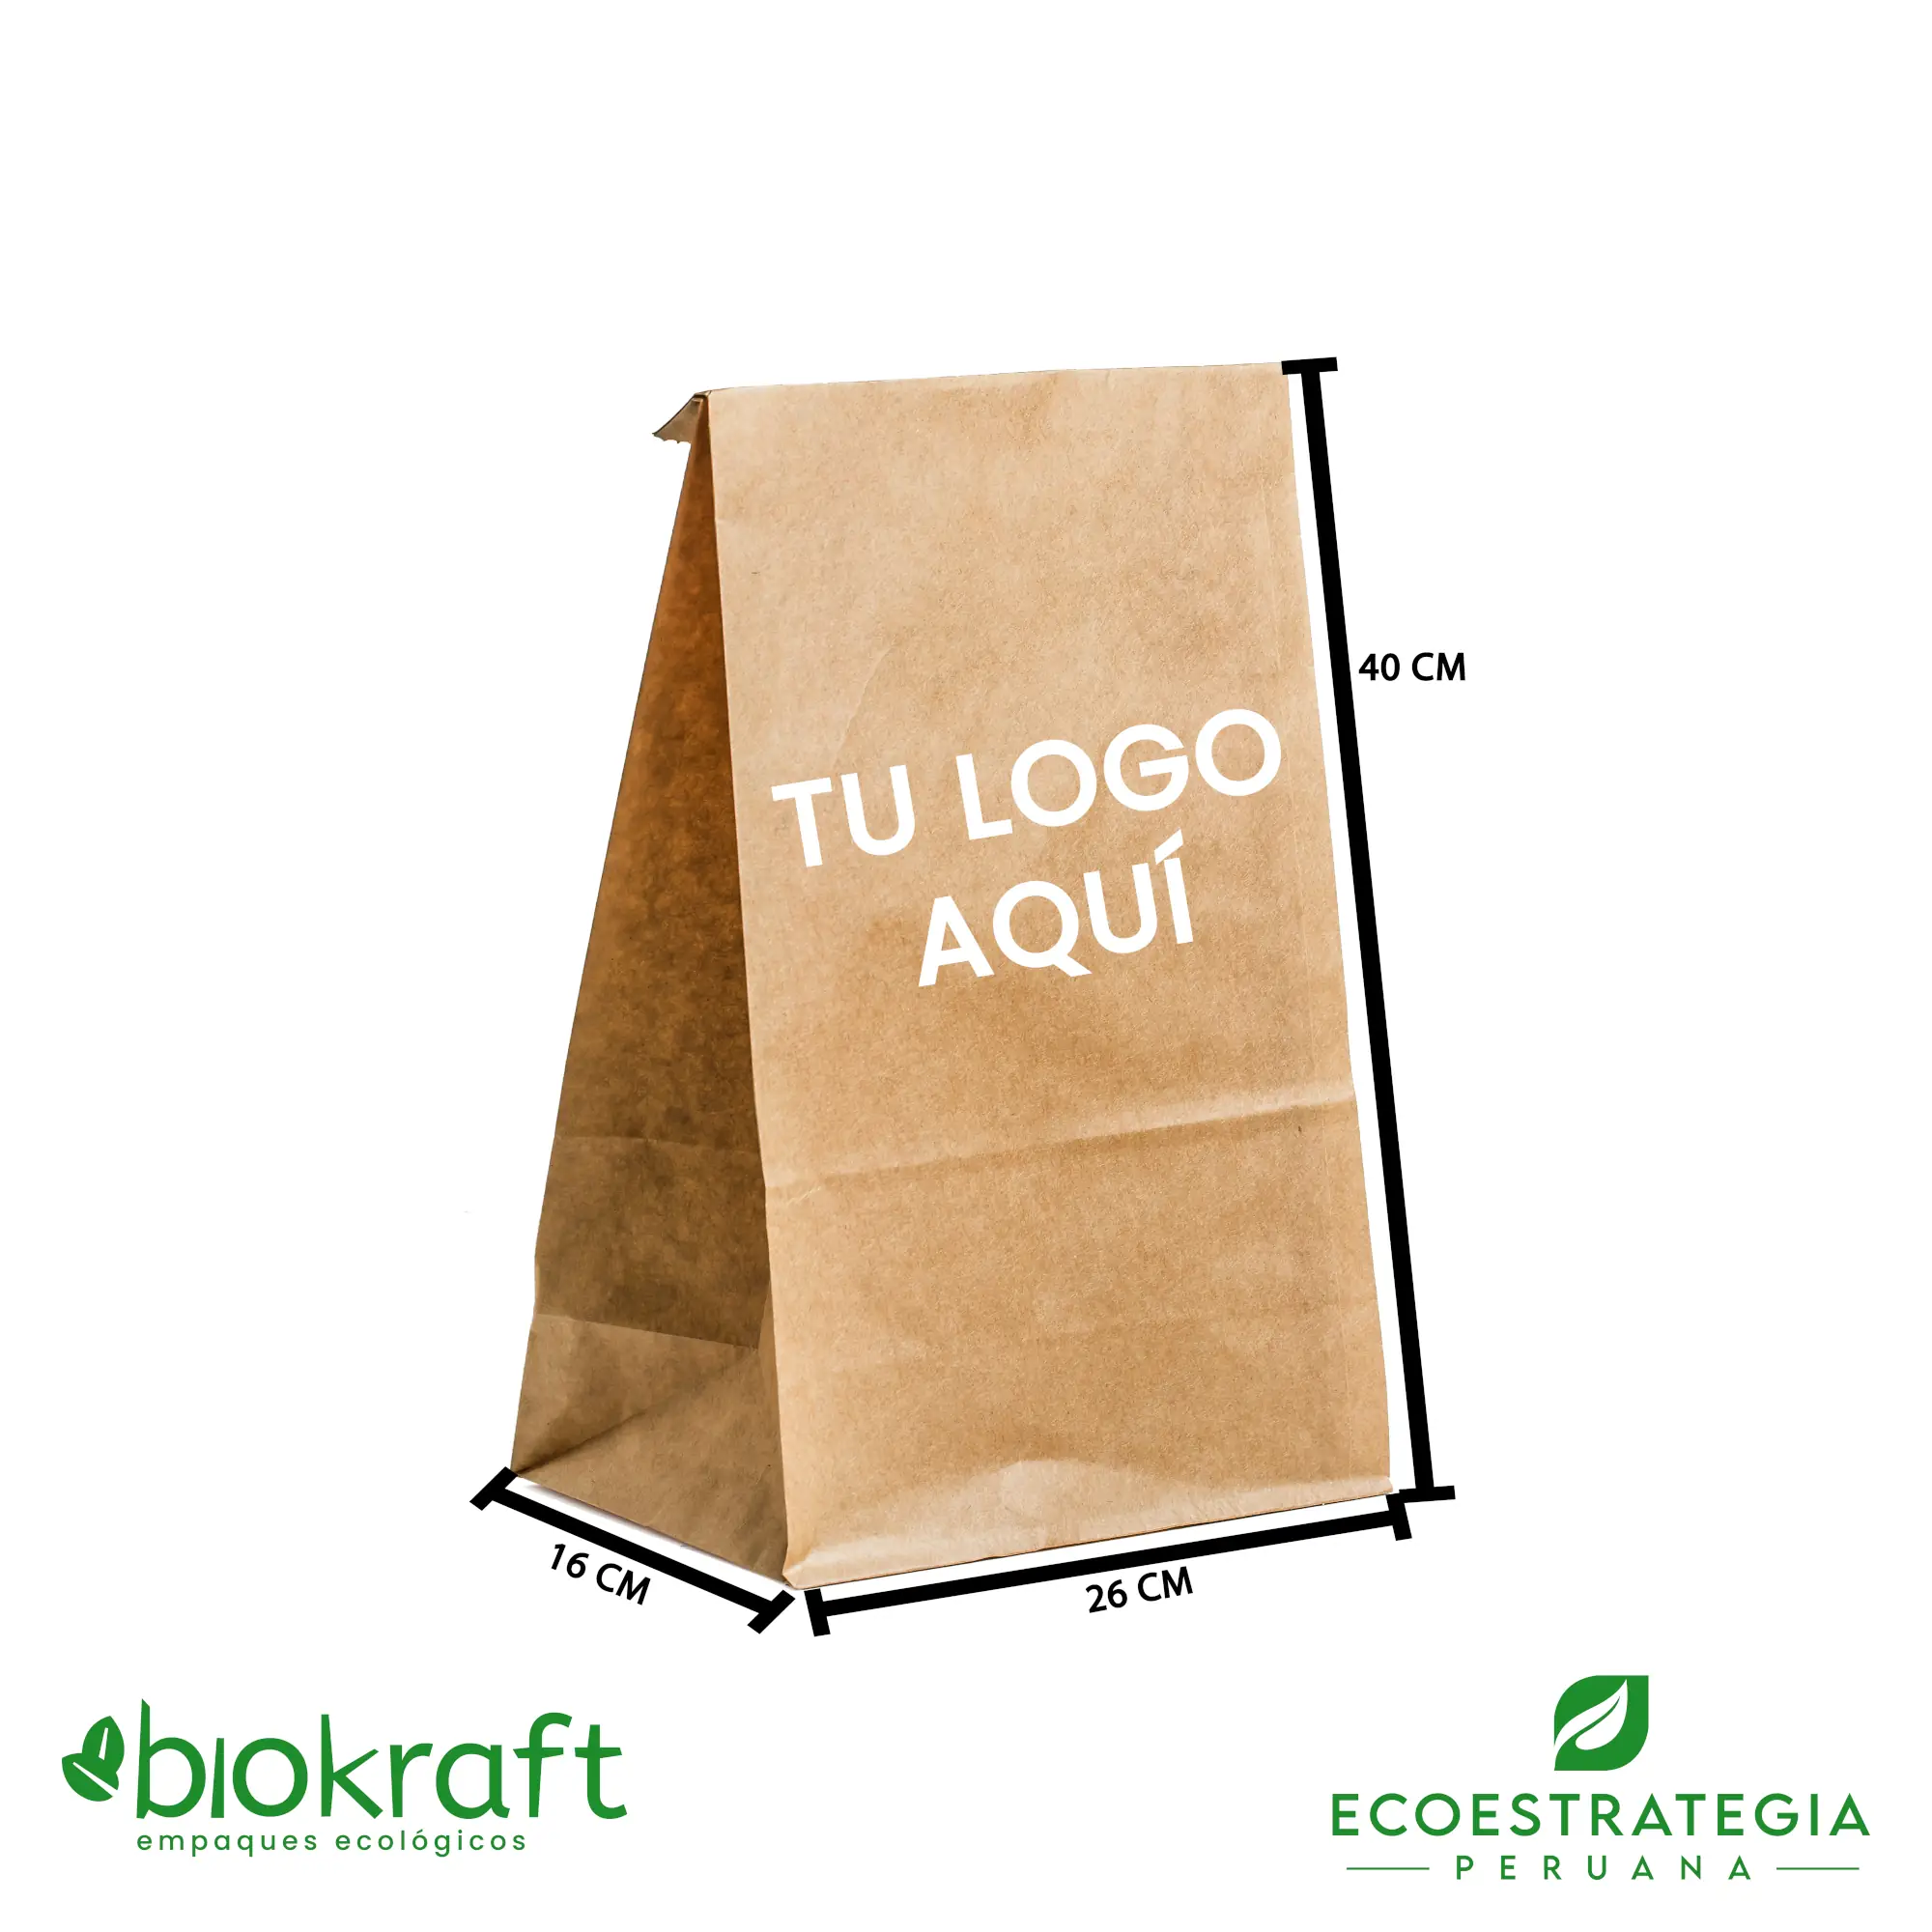 Puno ellos rumor Eco Estrategia Peruana: Bolsa papel kraft biodegradable #30